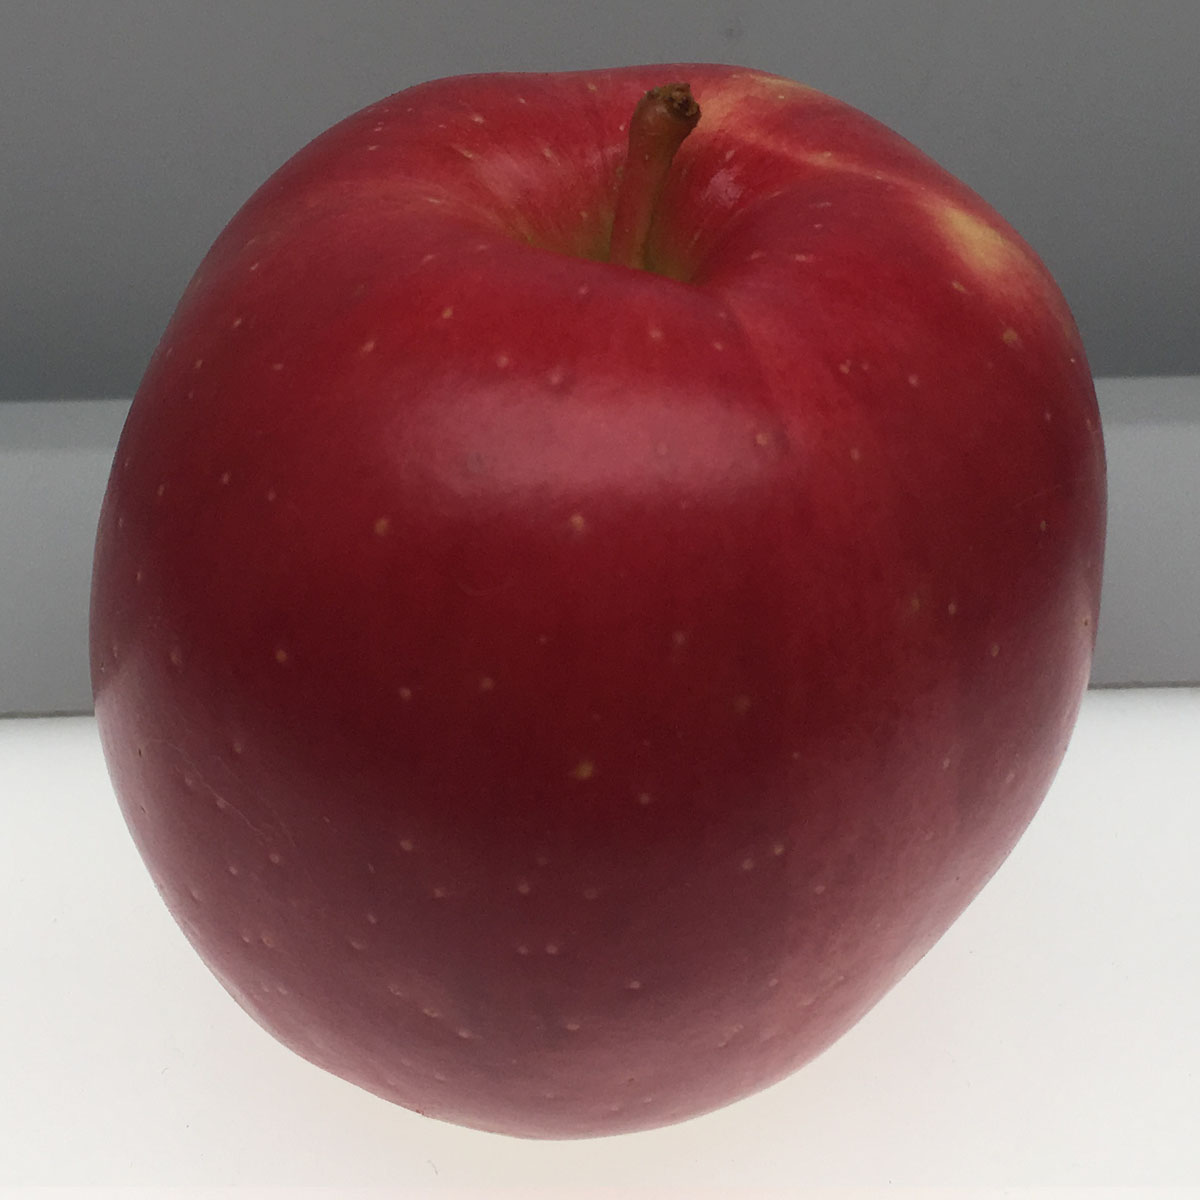 Hubbardston Nonsuch apple